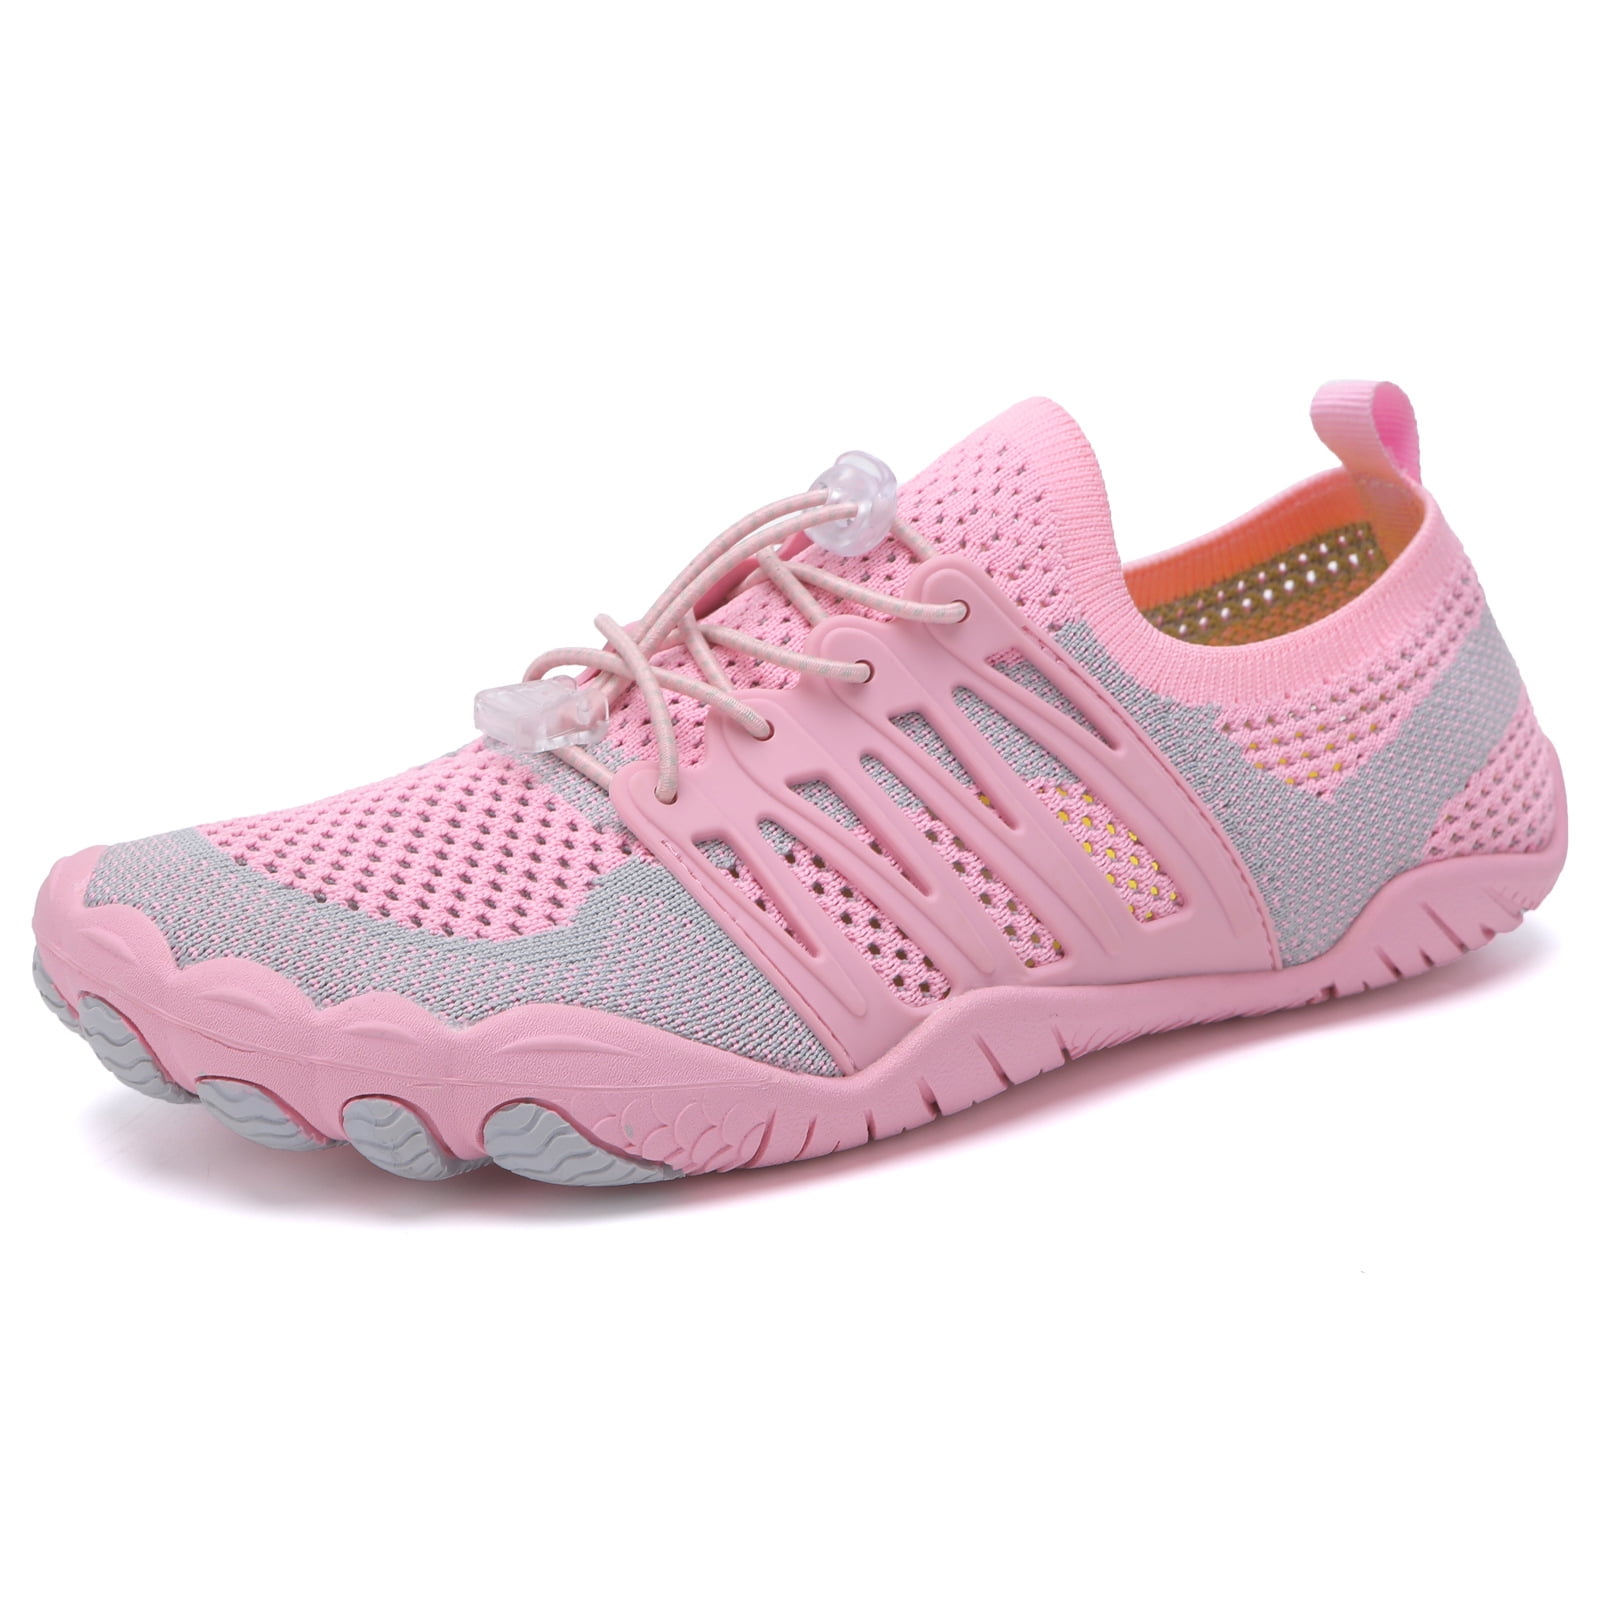 Women's Minimalist Trail Running Barefoot Shoes | Wide Toe Box | Zero ...